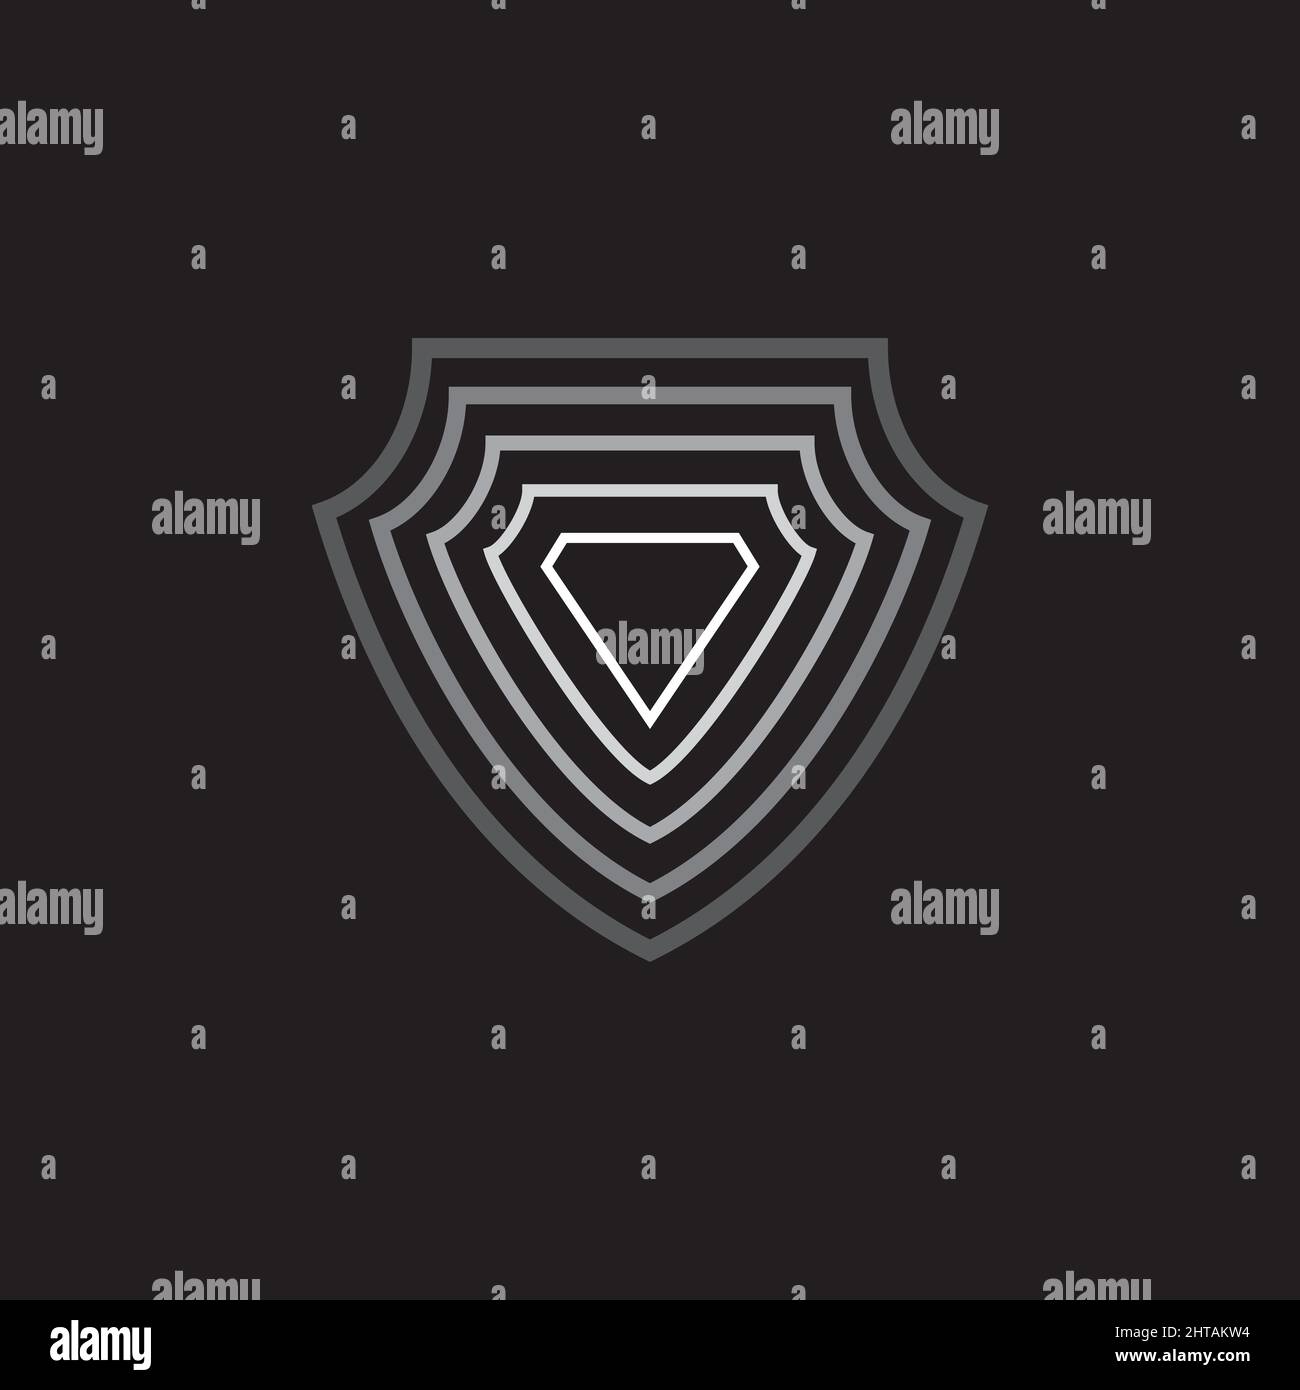 Shield and diamond logo design illustration vector template Stock Vector